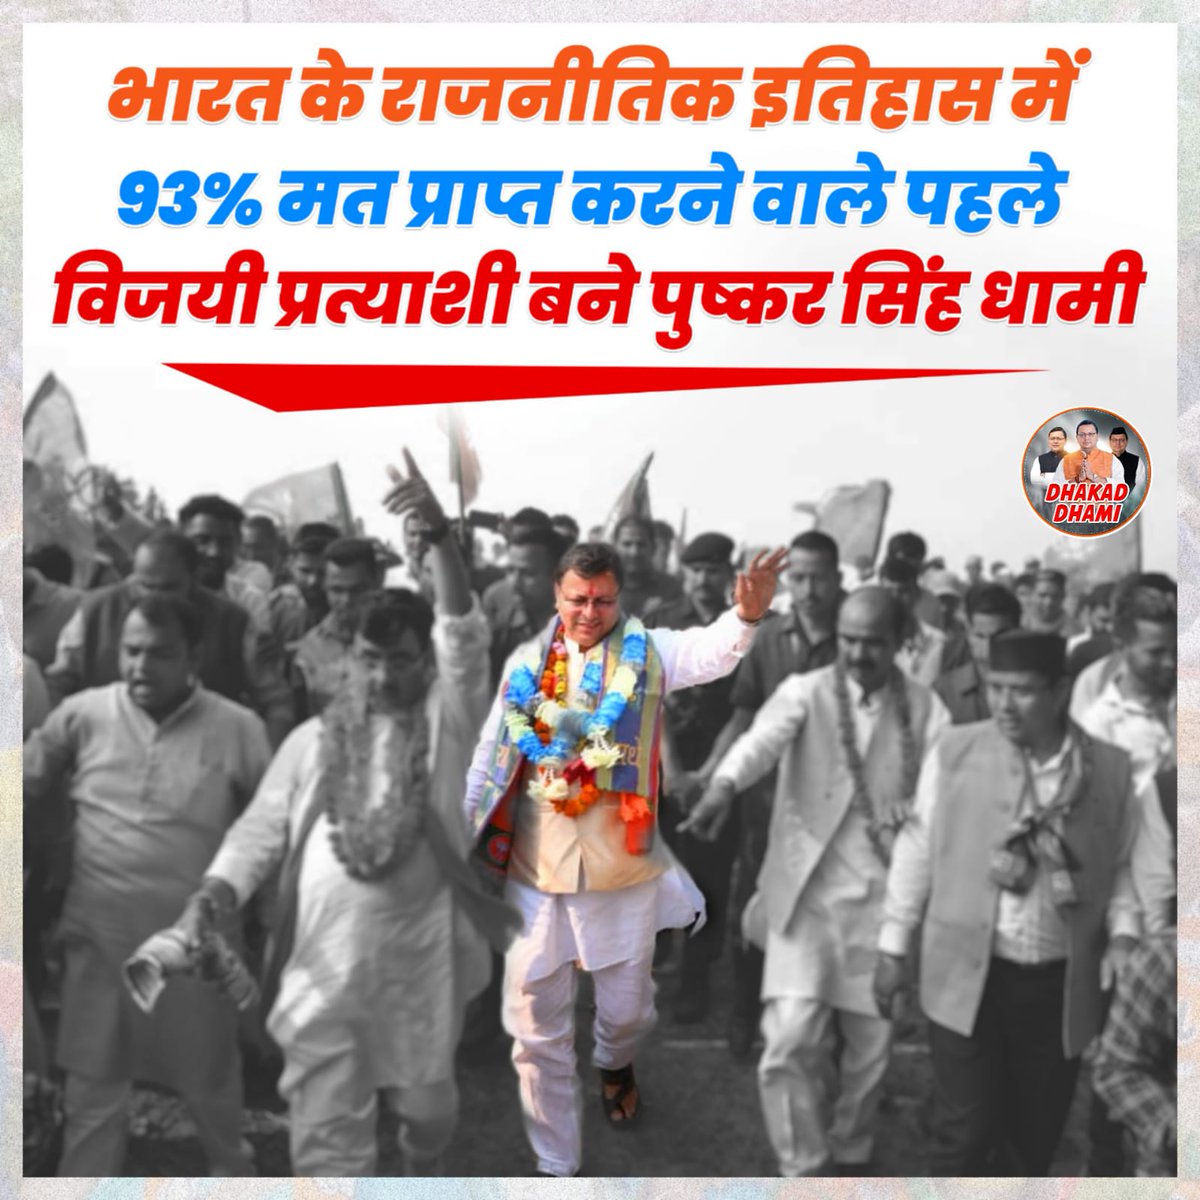 RT @jaiprakashshah2: Congratulations to dynamic CM @pushkardhami Ji for record winning from Champawat https://t.co/hQXXwt8xSa